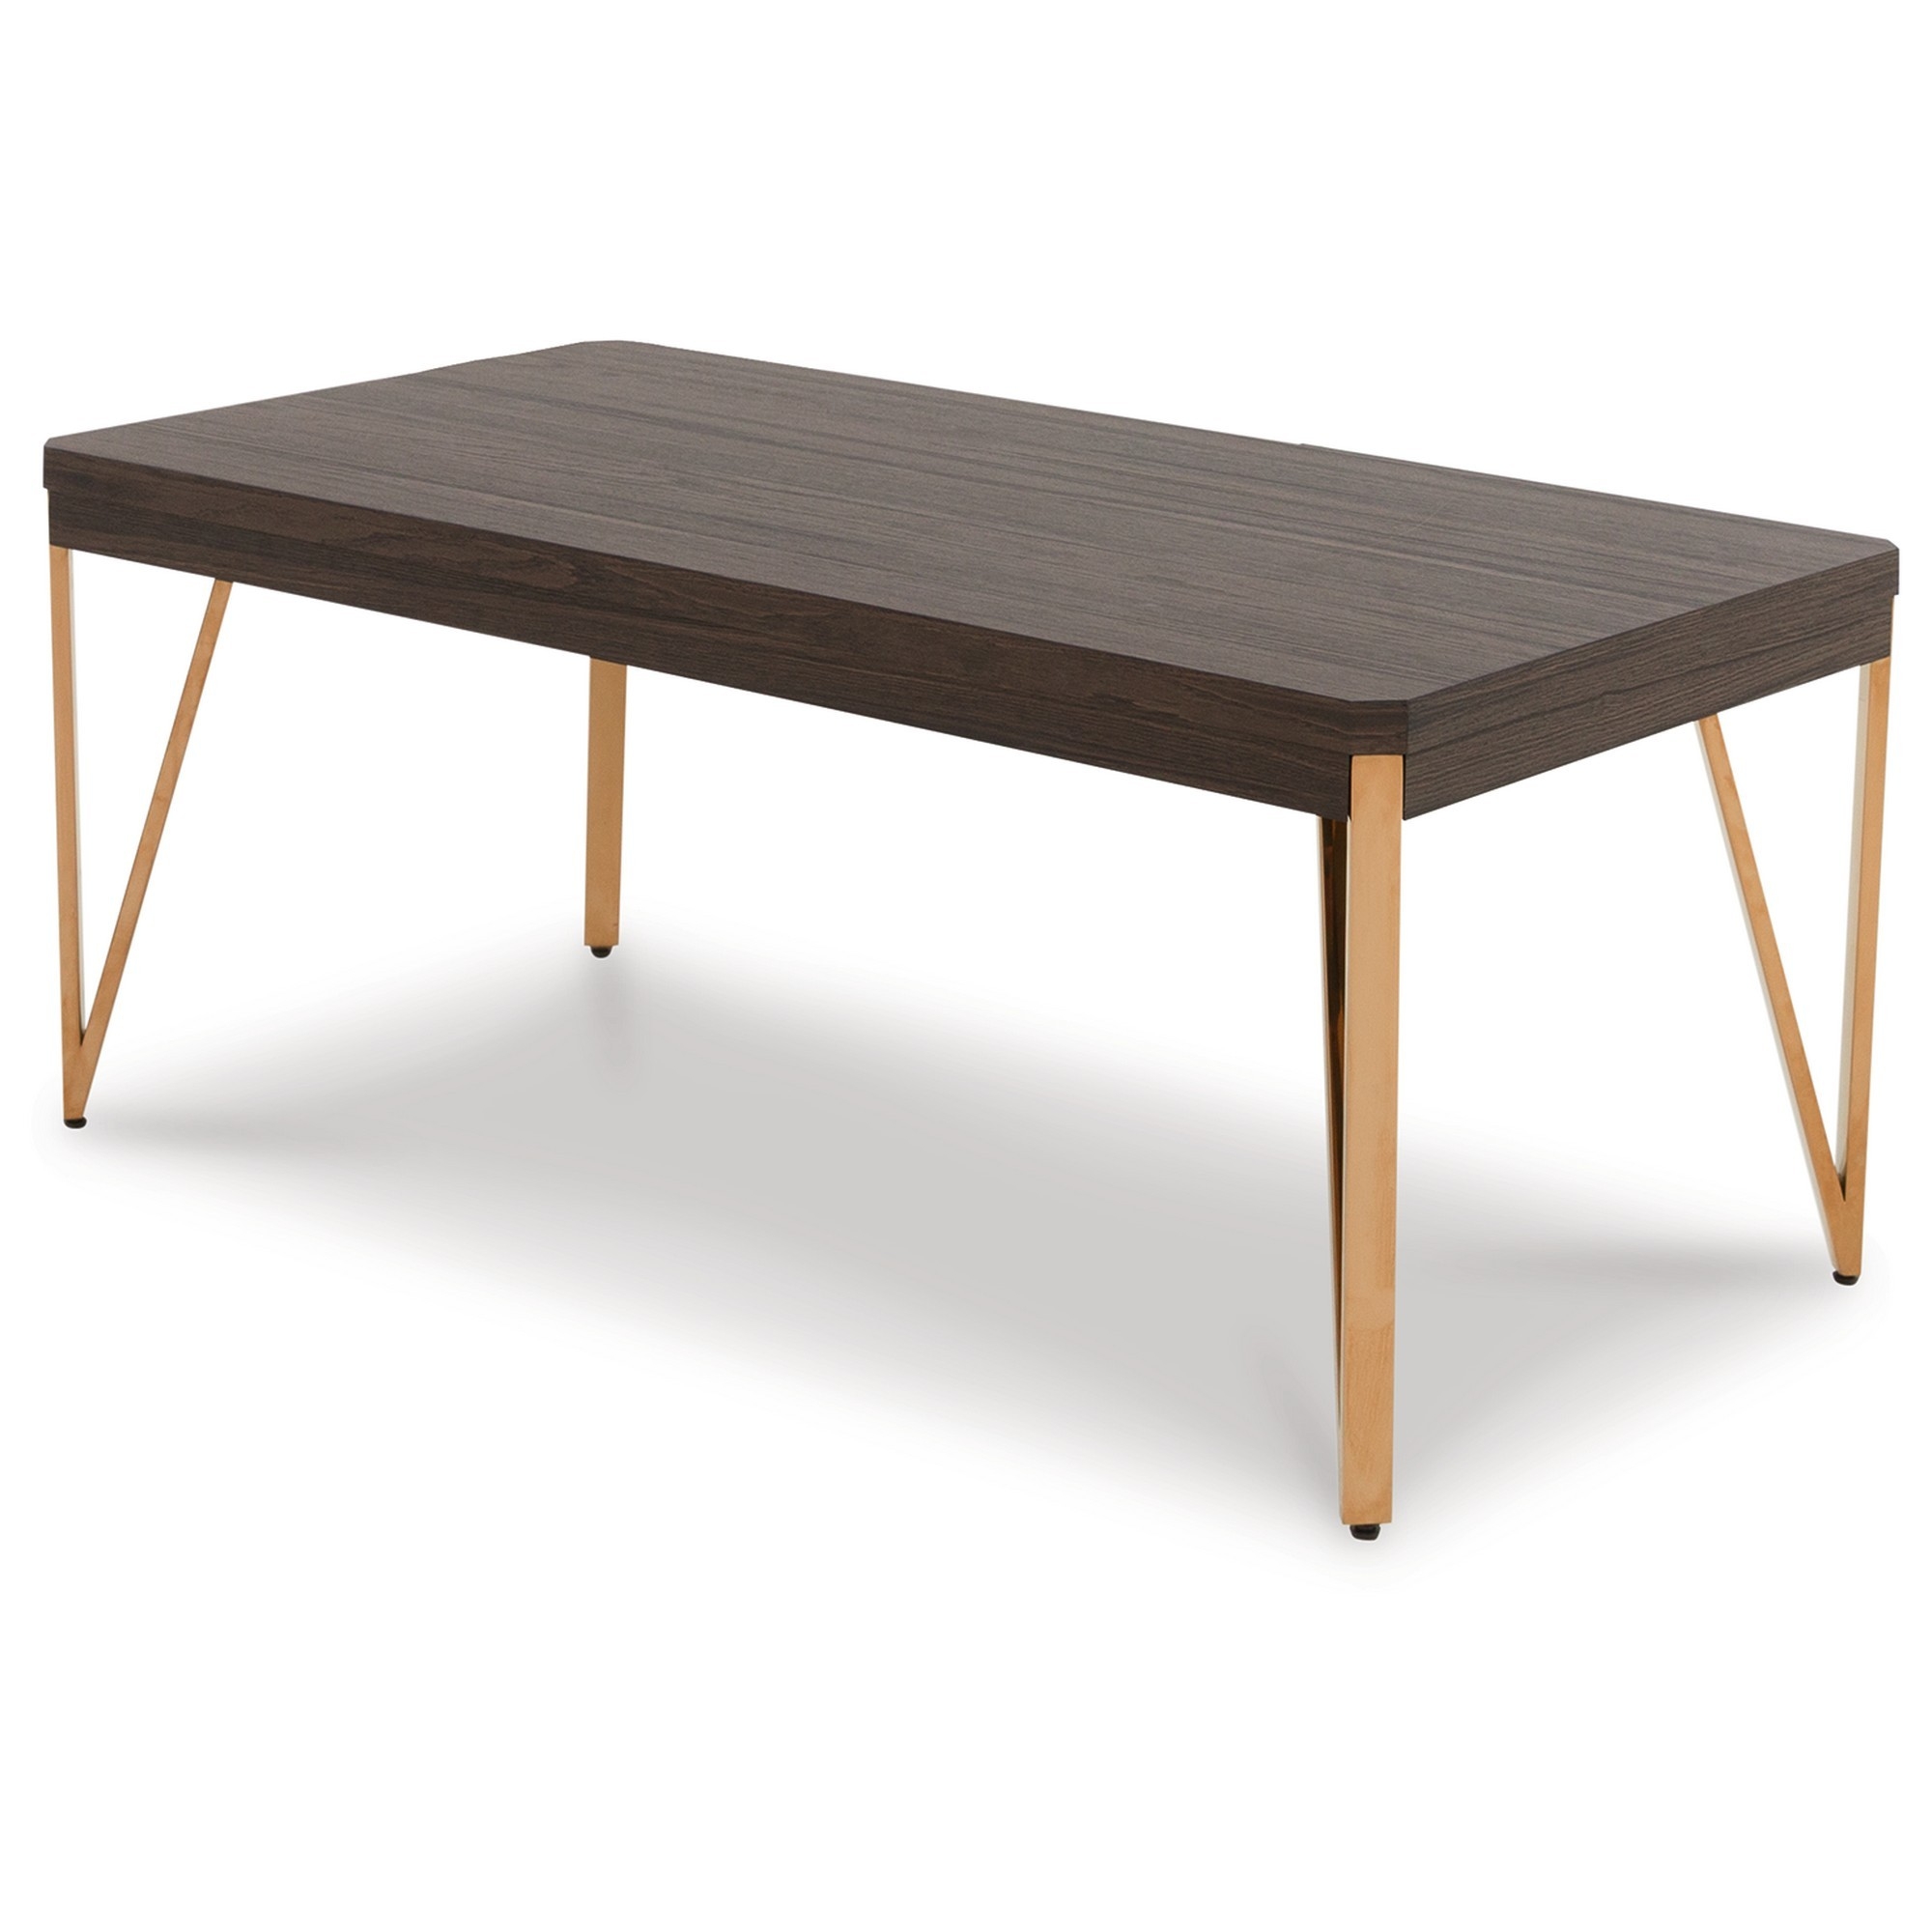 3 Piece Coffee And End Table Set, Steel Legs, Wood Grain Details, Brown- Saltoro Sherpi